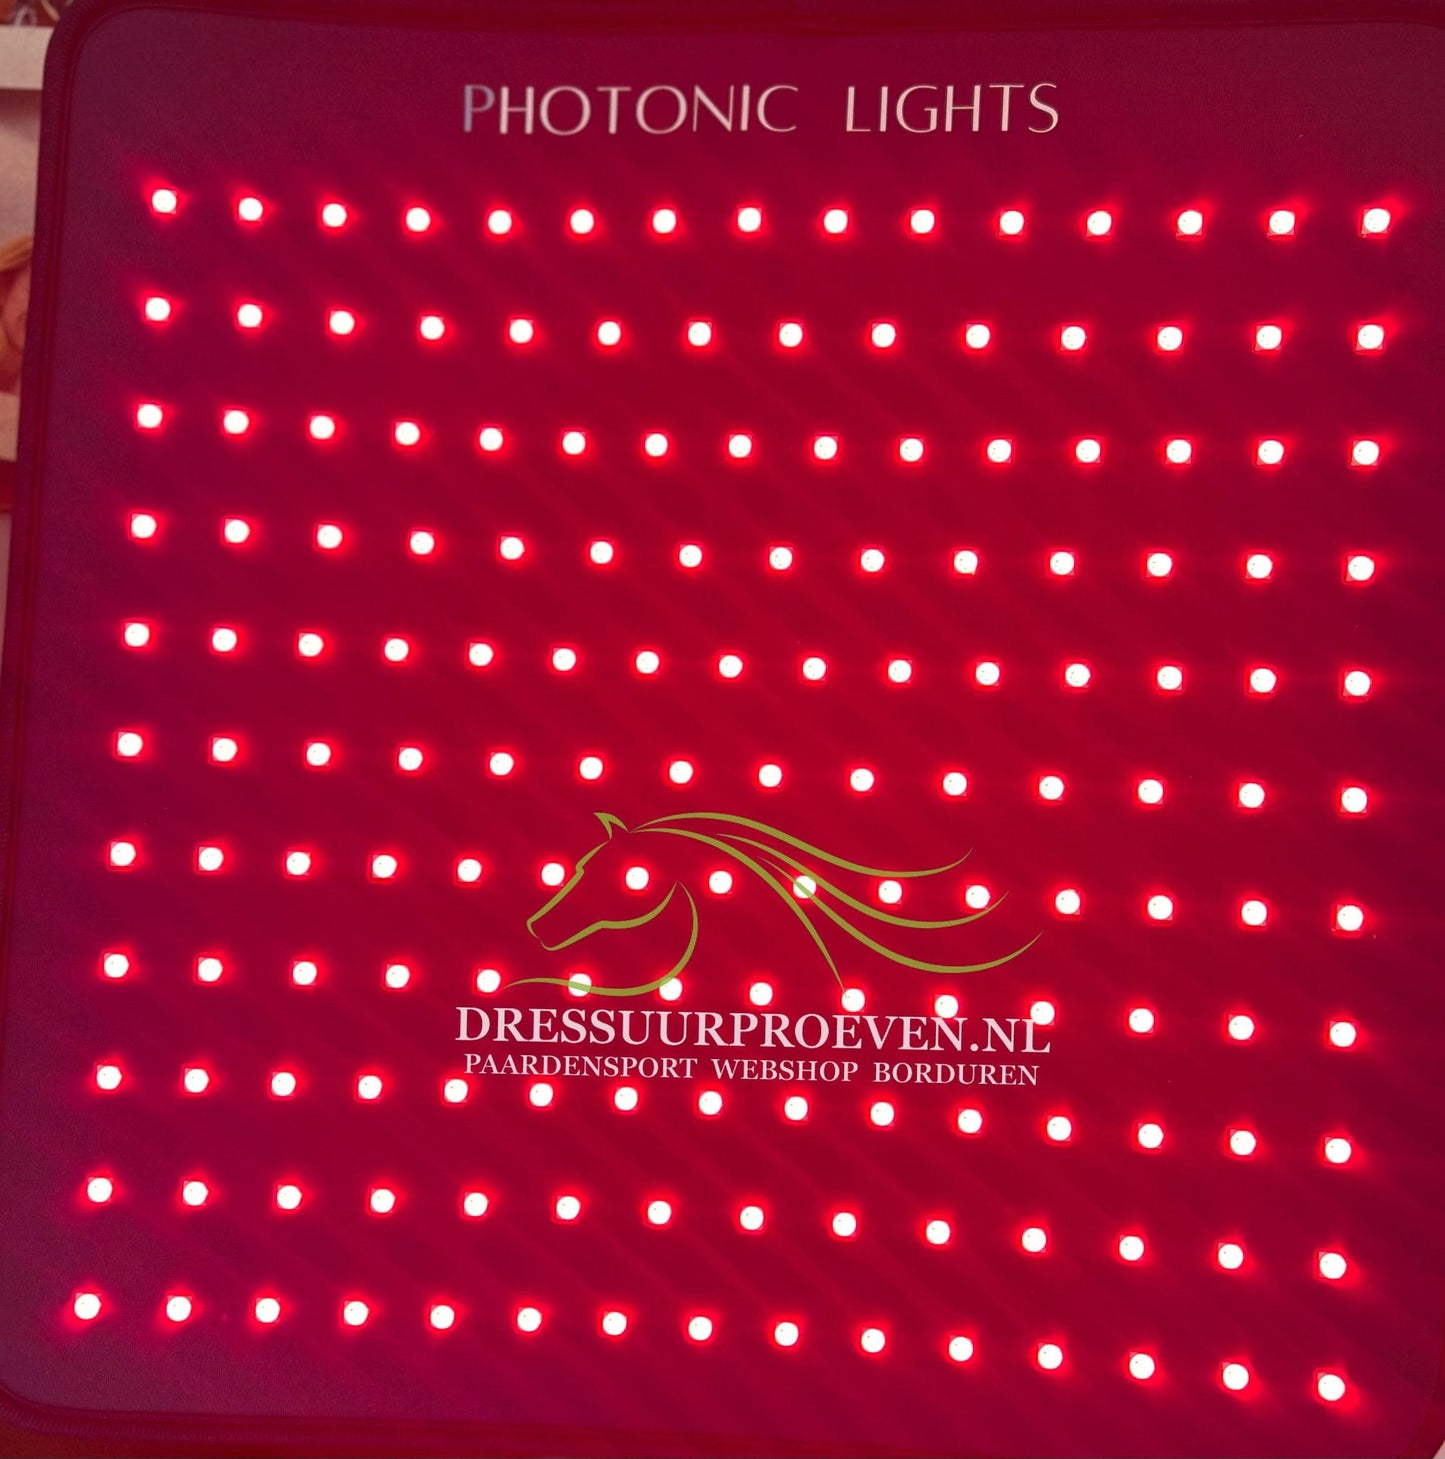 Photonic Lights HighPAD